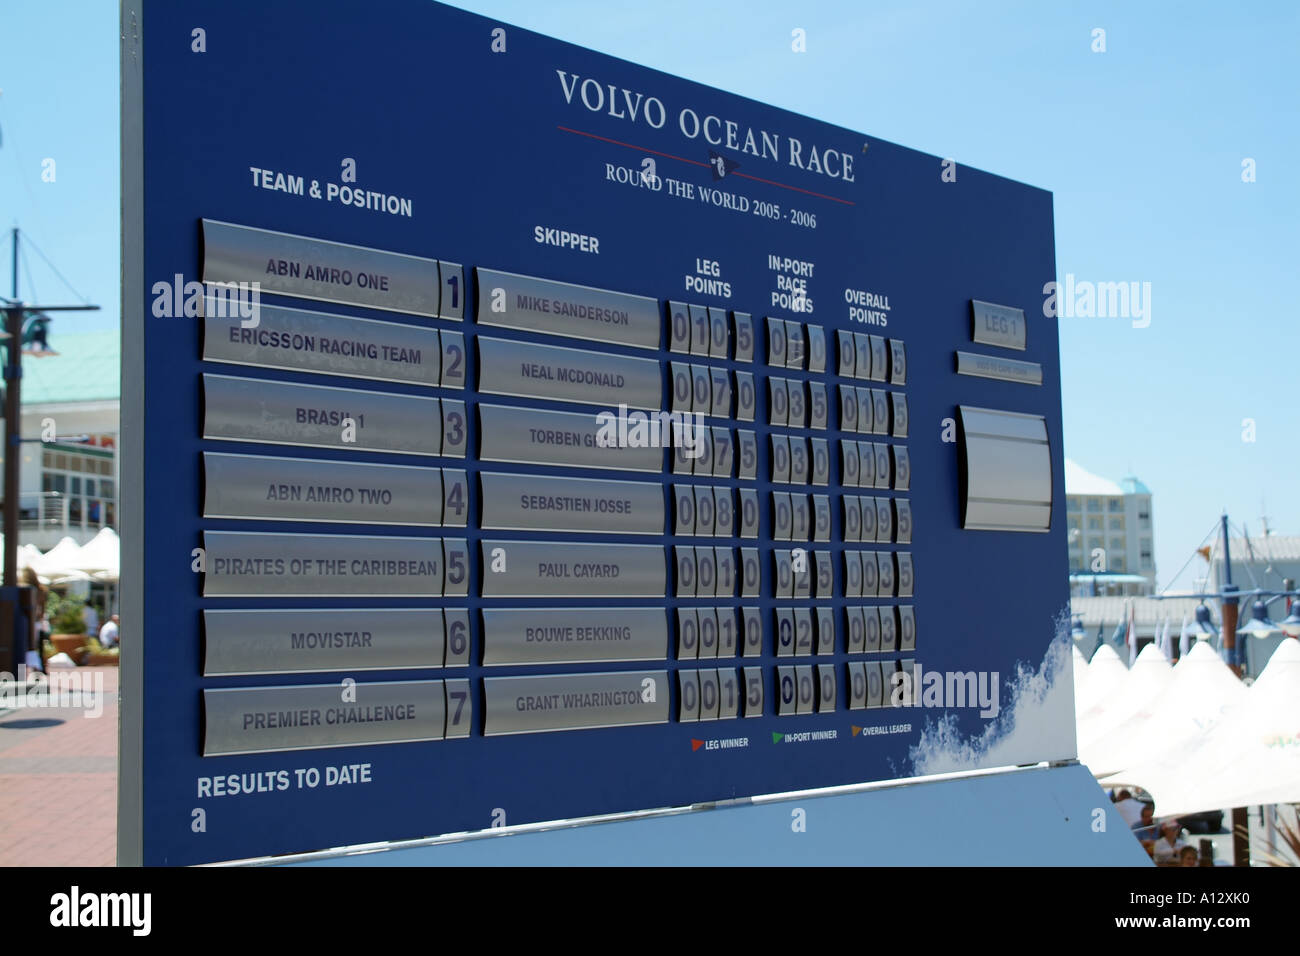 Ocean Race score board Leg 1 results Volvo Cape Town South Africa RSA Stock Photo